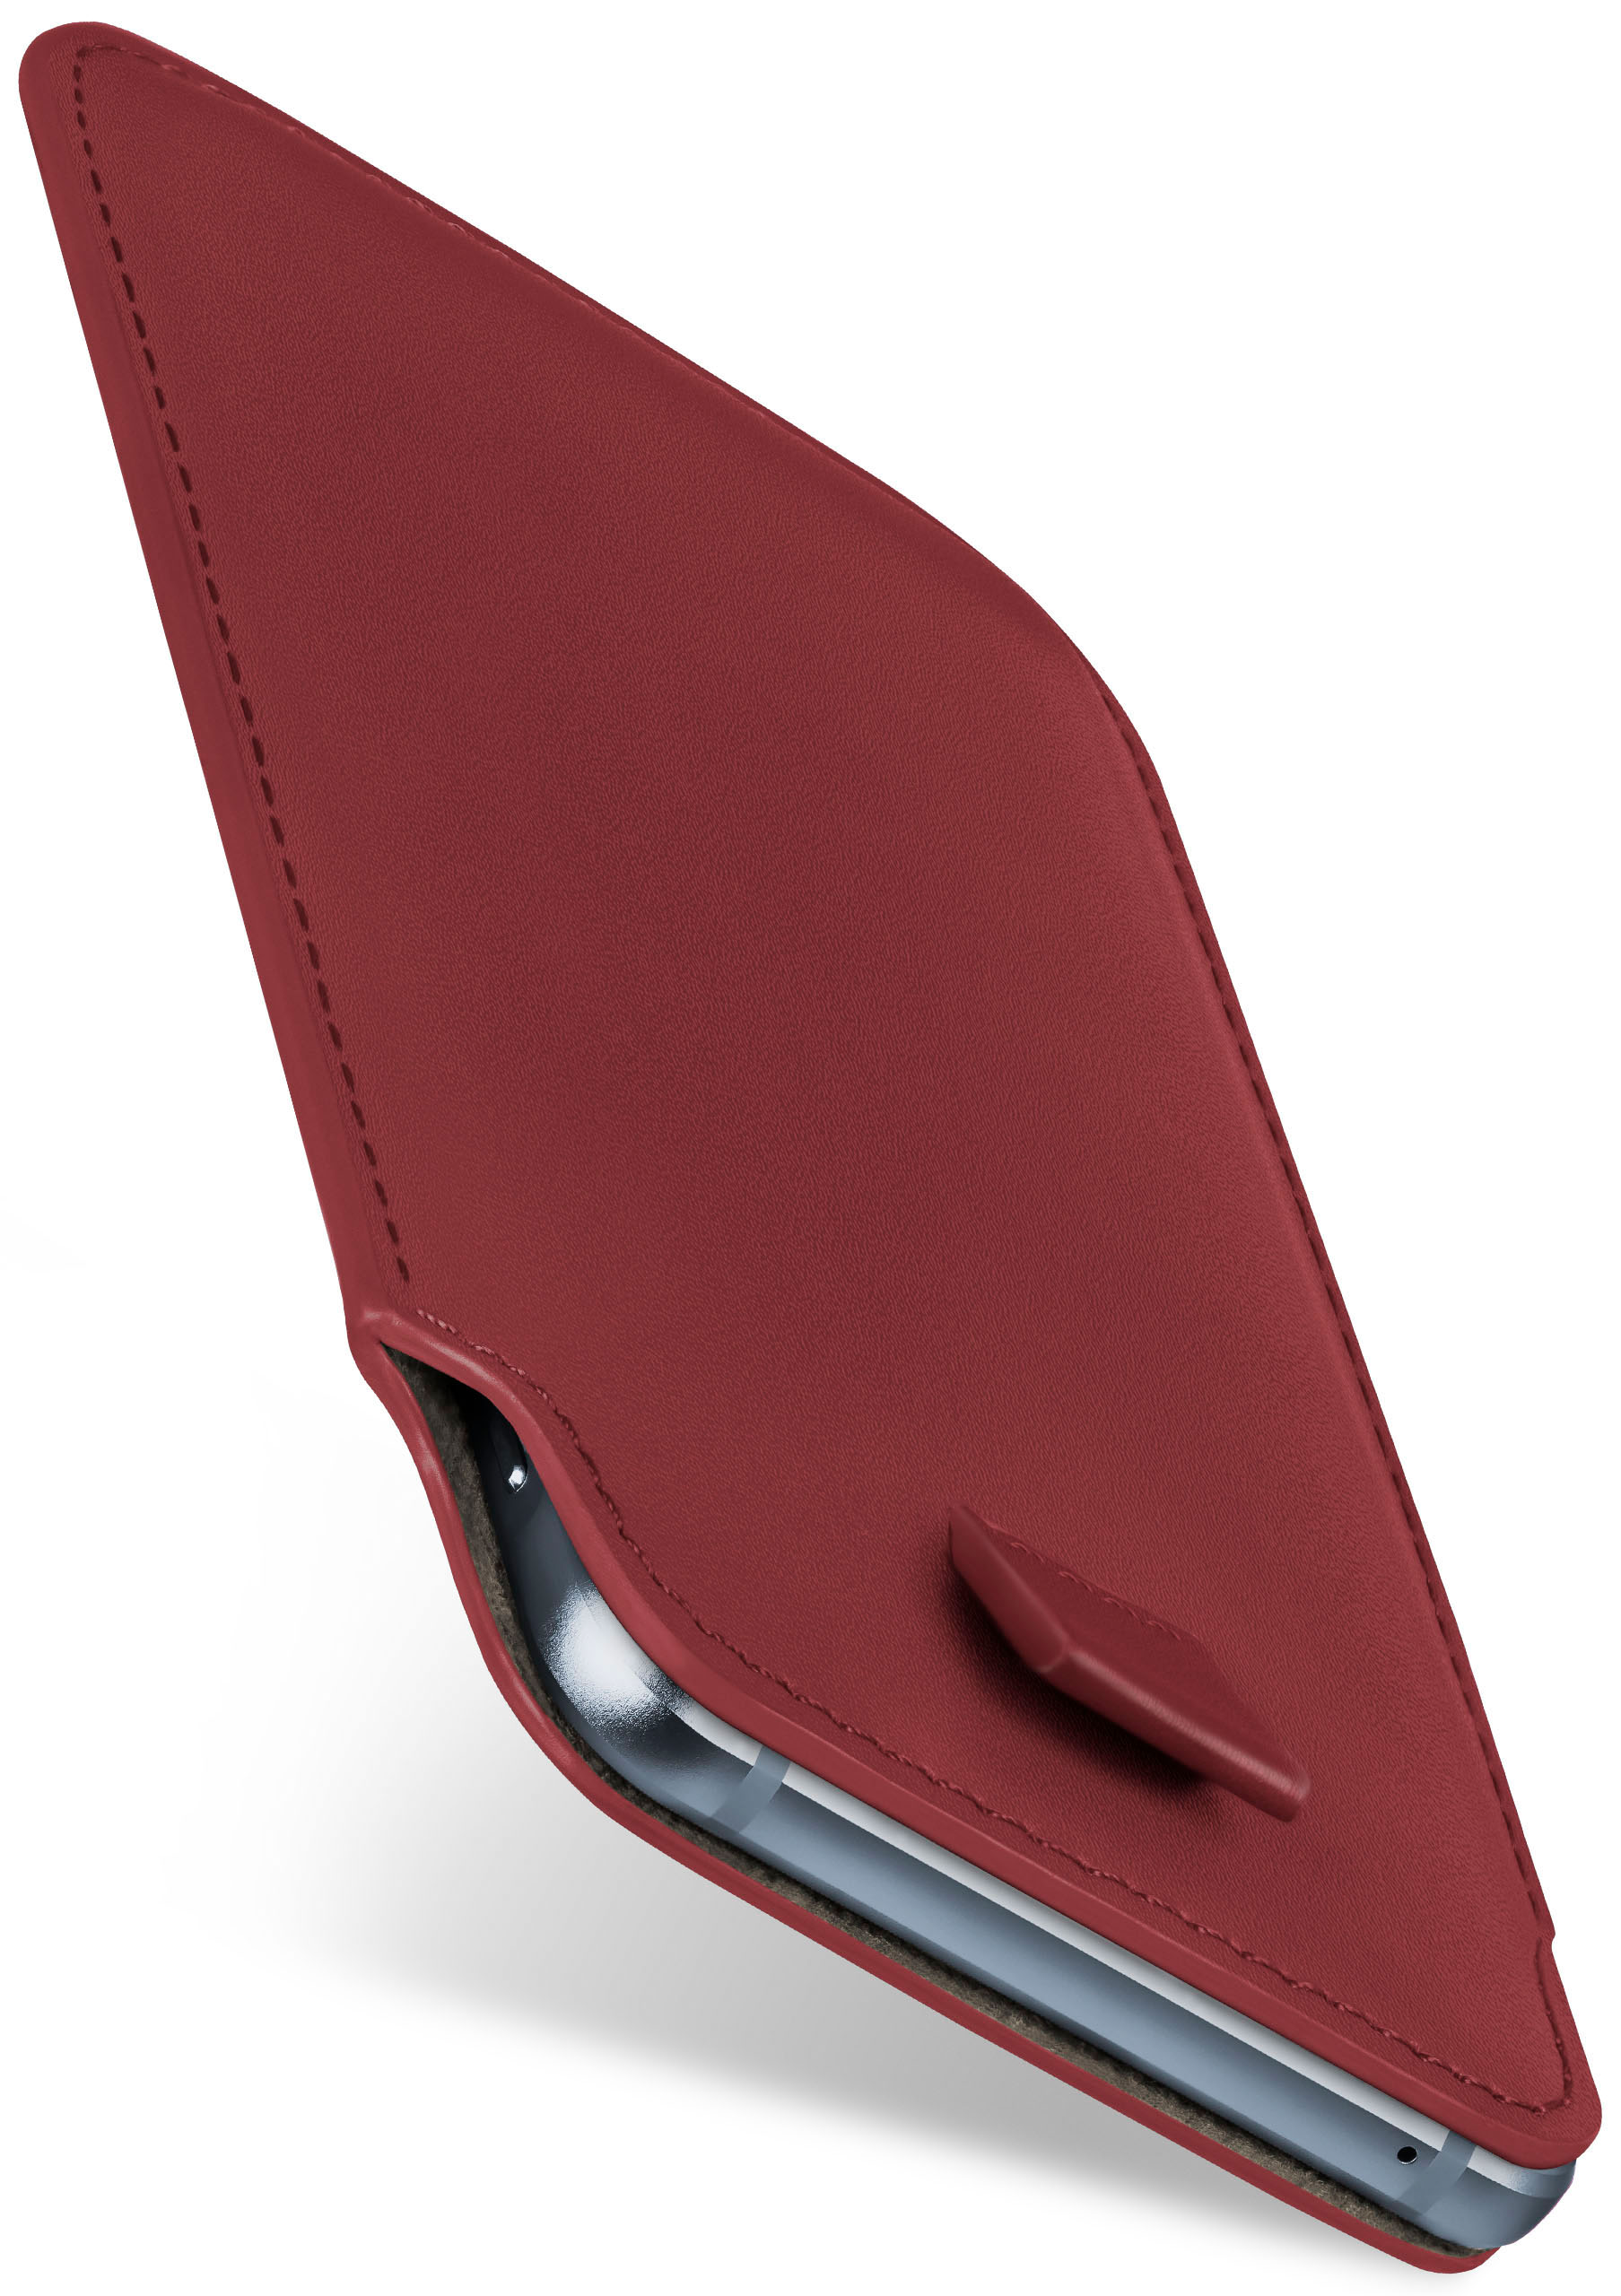 MOEX Slide Full LG, Case, Maroon-Red Q7, Cover